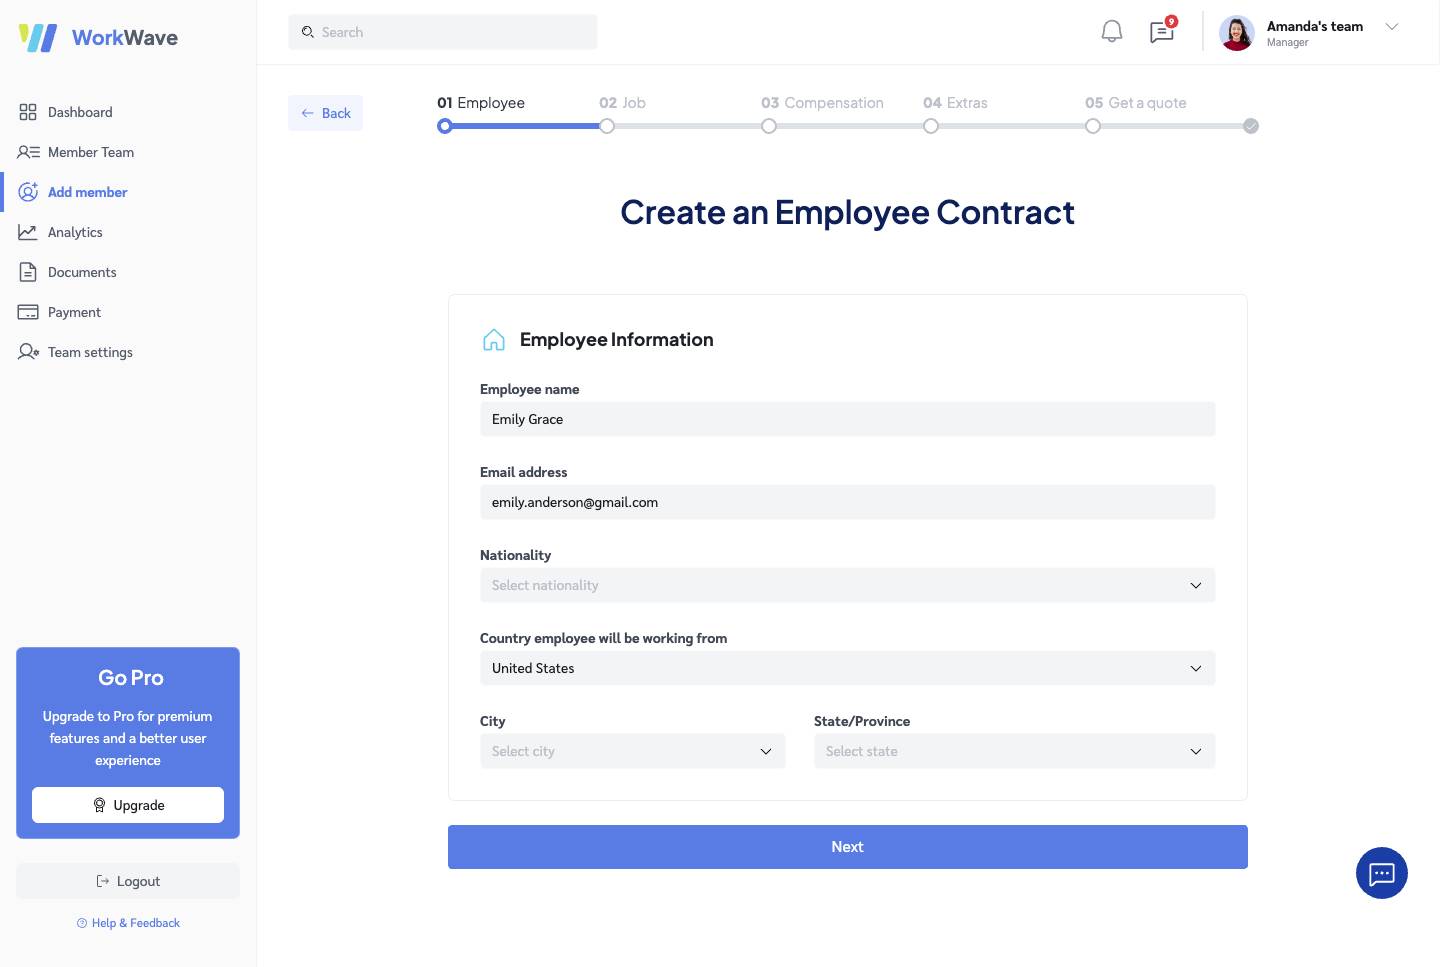 Create contract -  Employee information